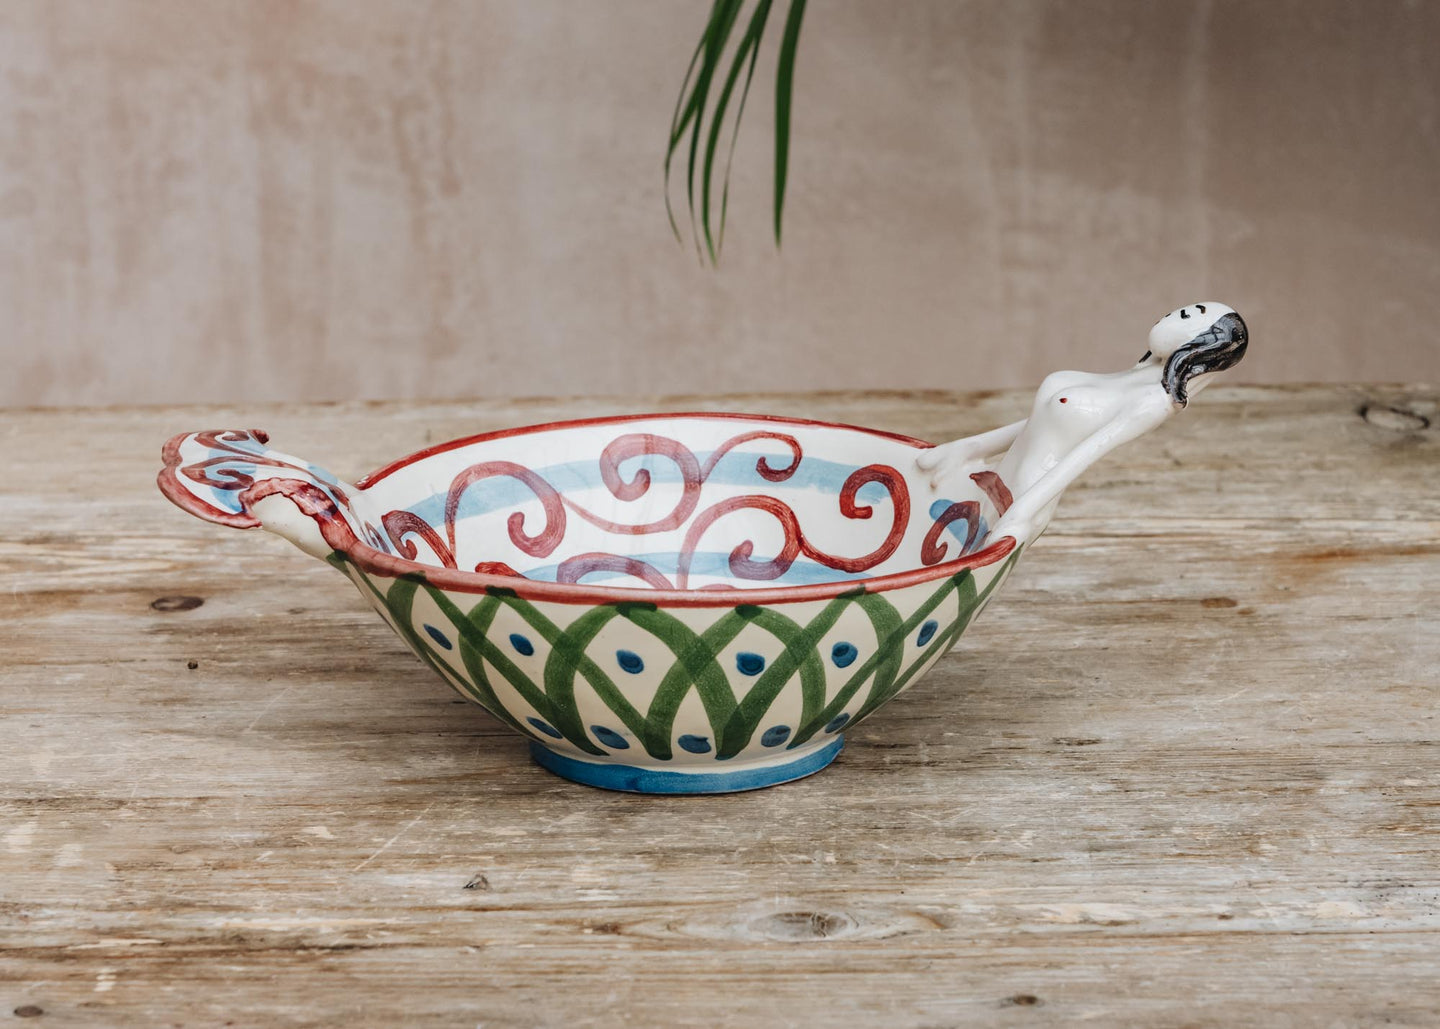 Les Ottomans Red Mermaid Ceramic Bowl